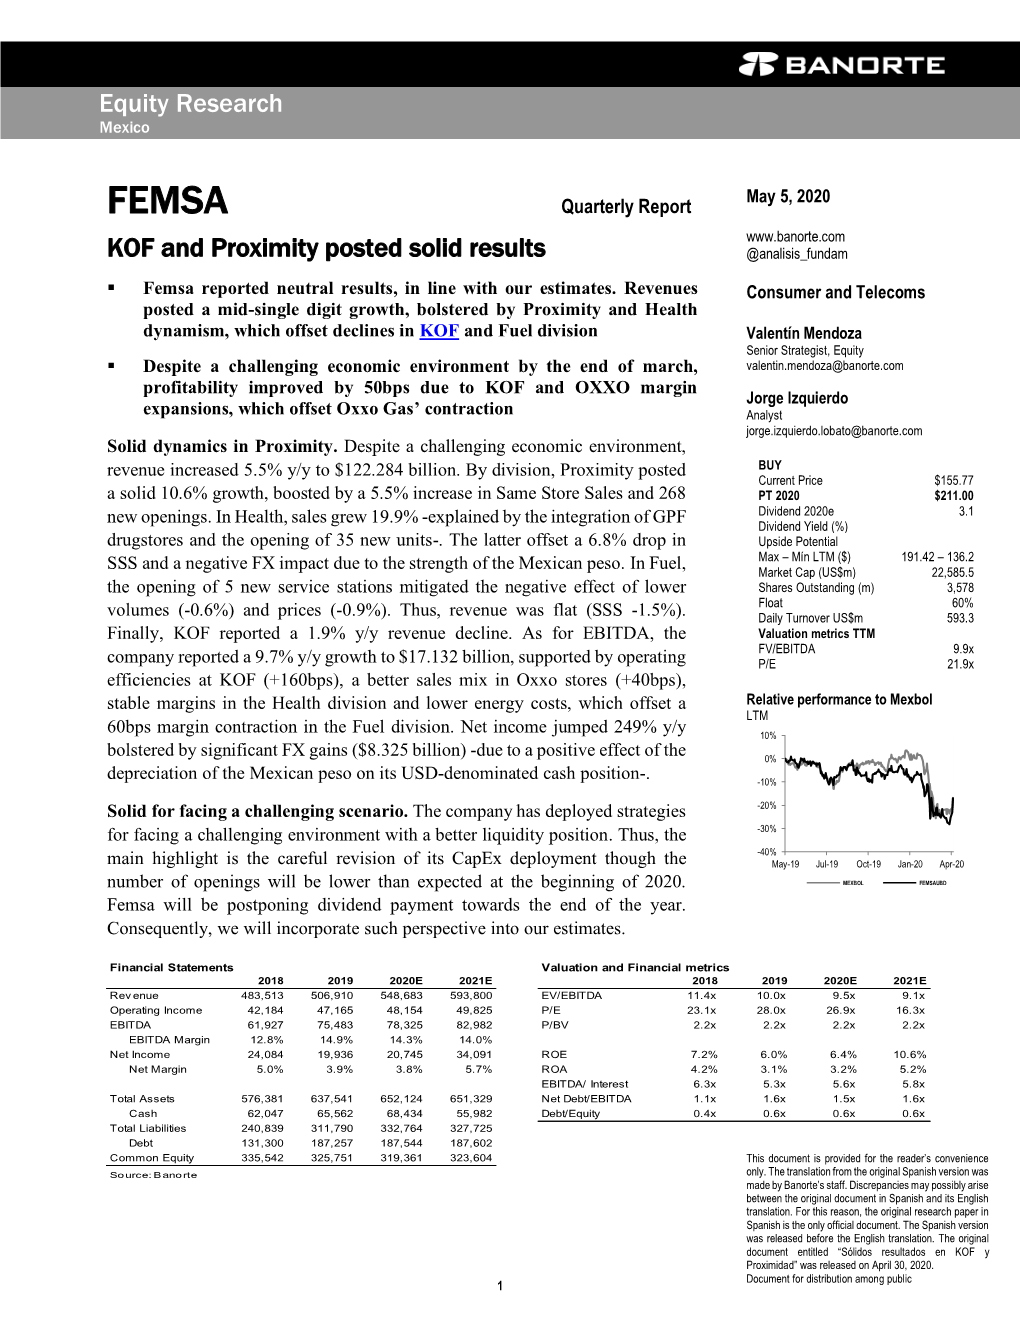 FEMSA KOF and Proximity Posted Solid Results @Analisis Fundam